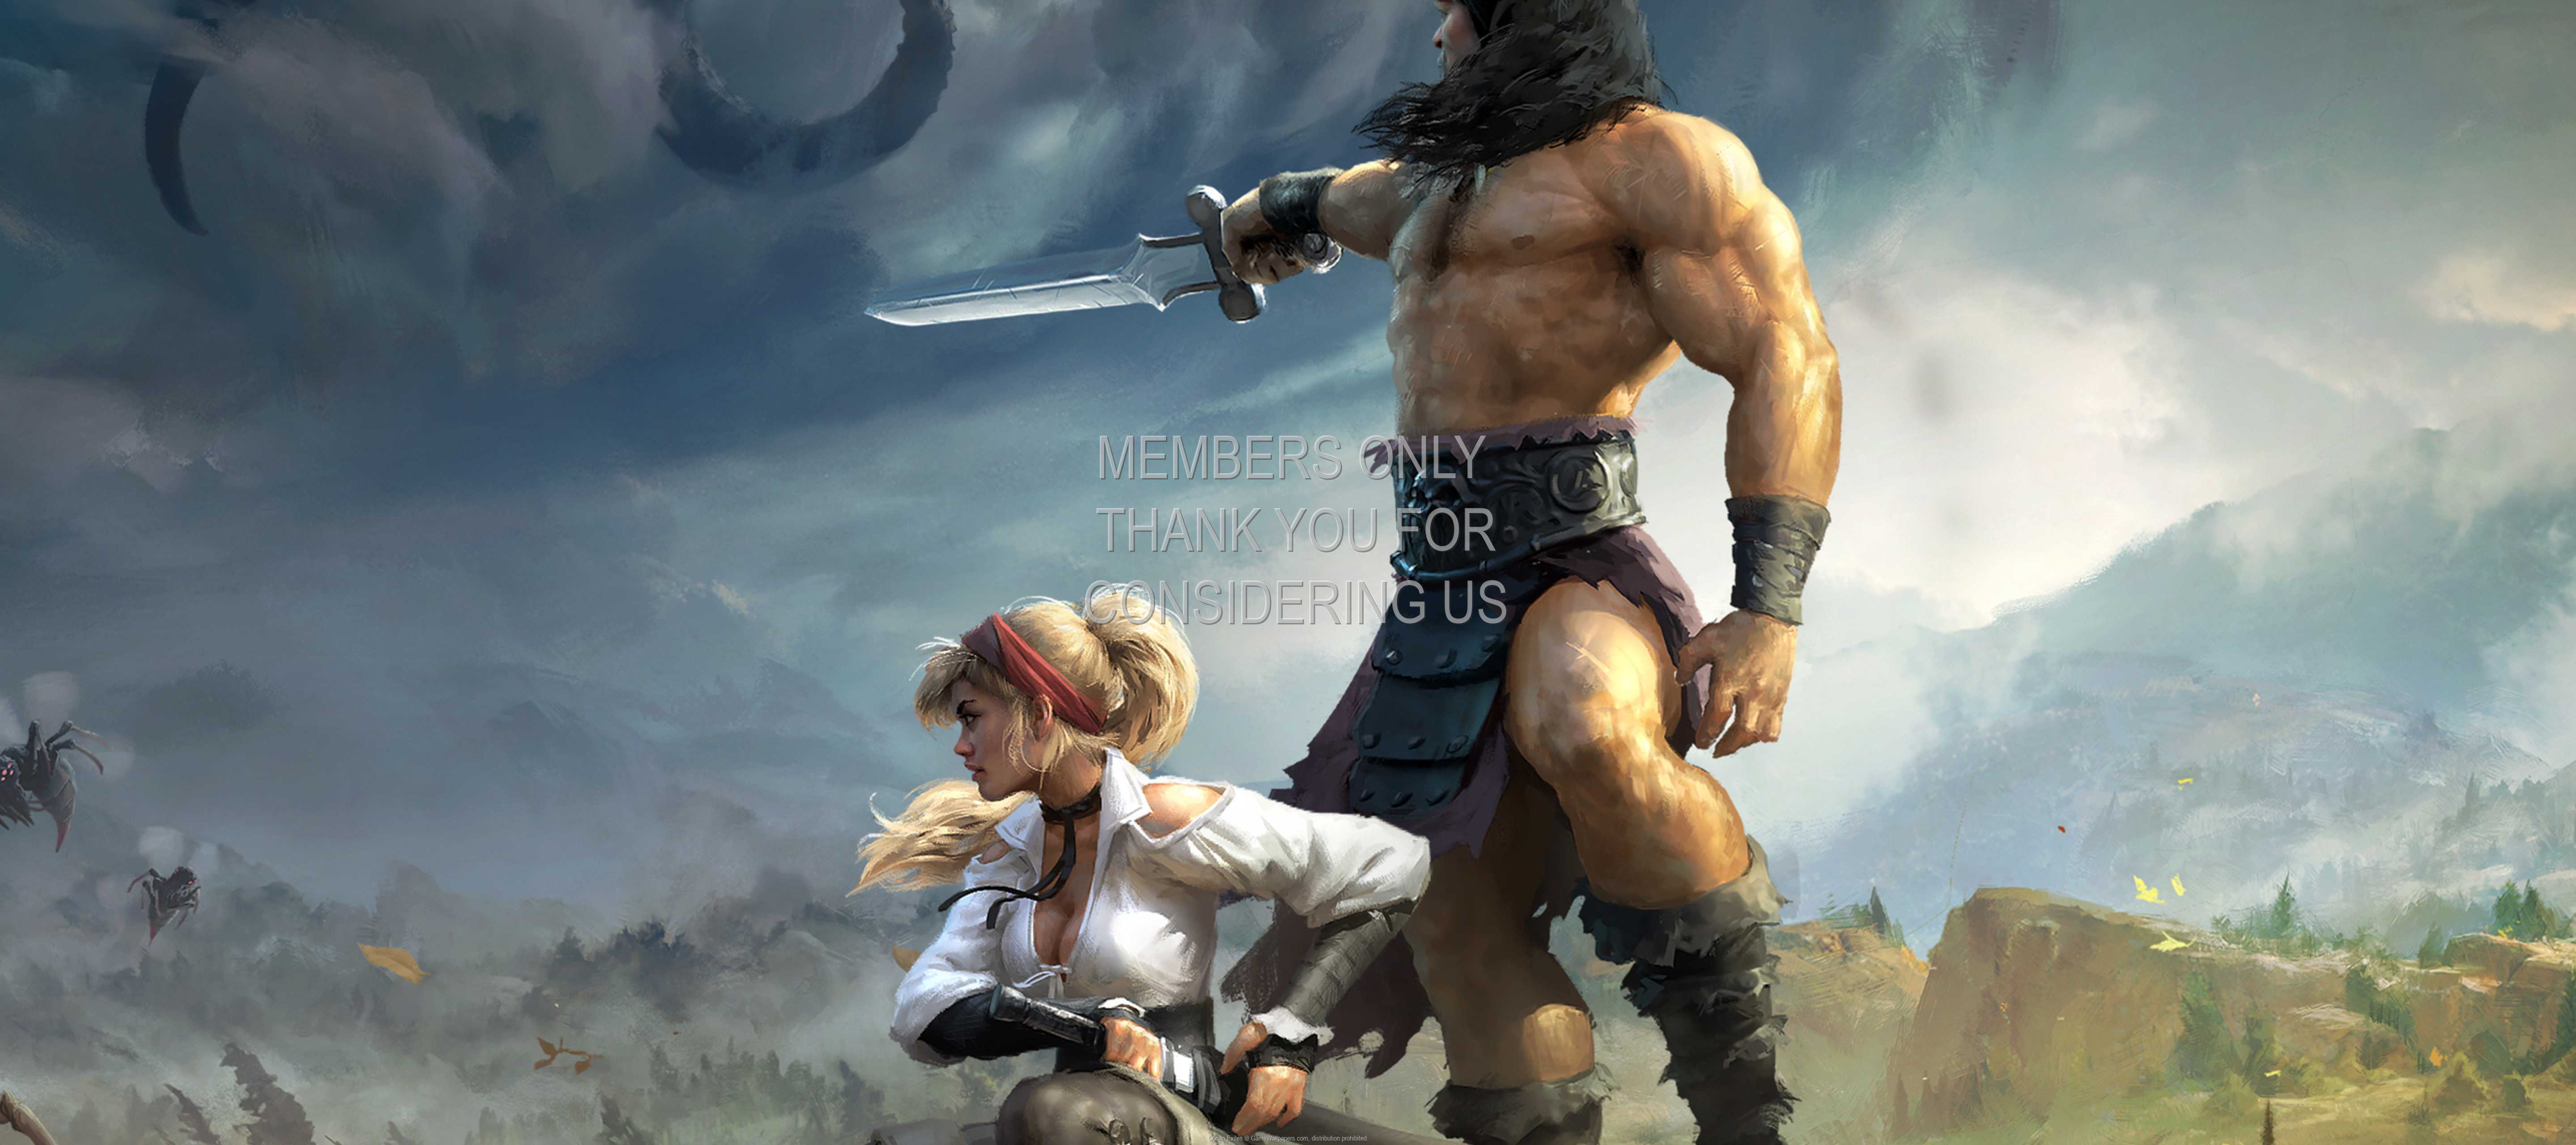 Conan Exiles 1440p%20Horizontal Mobile wallpaper or background 02